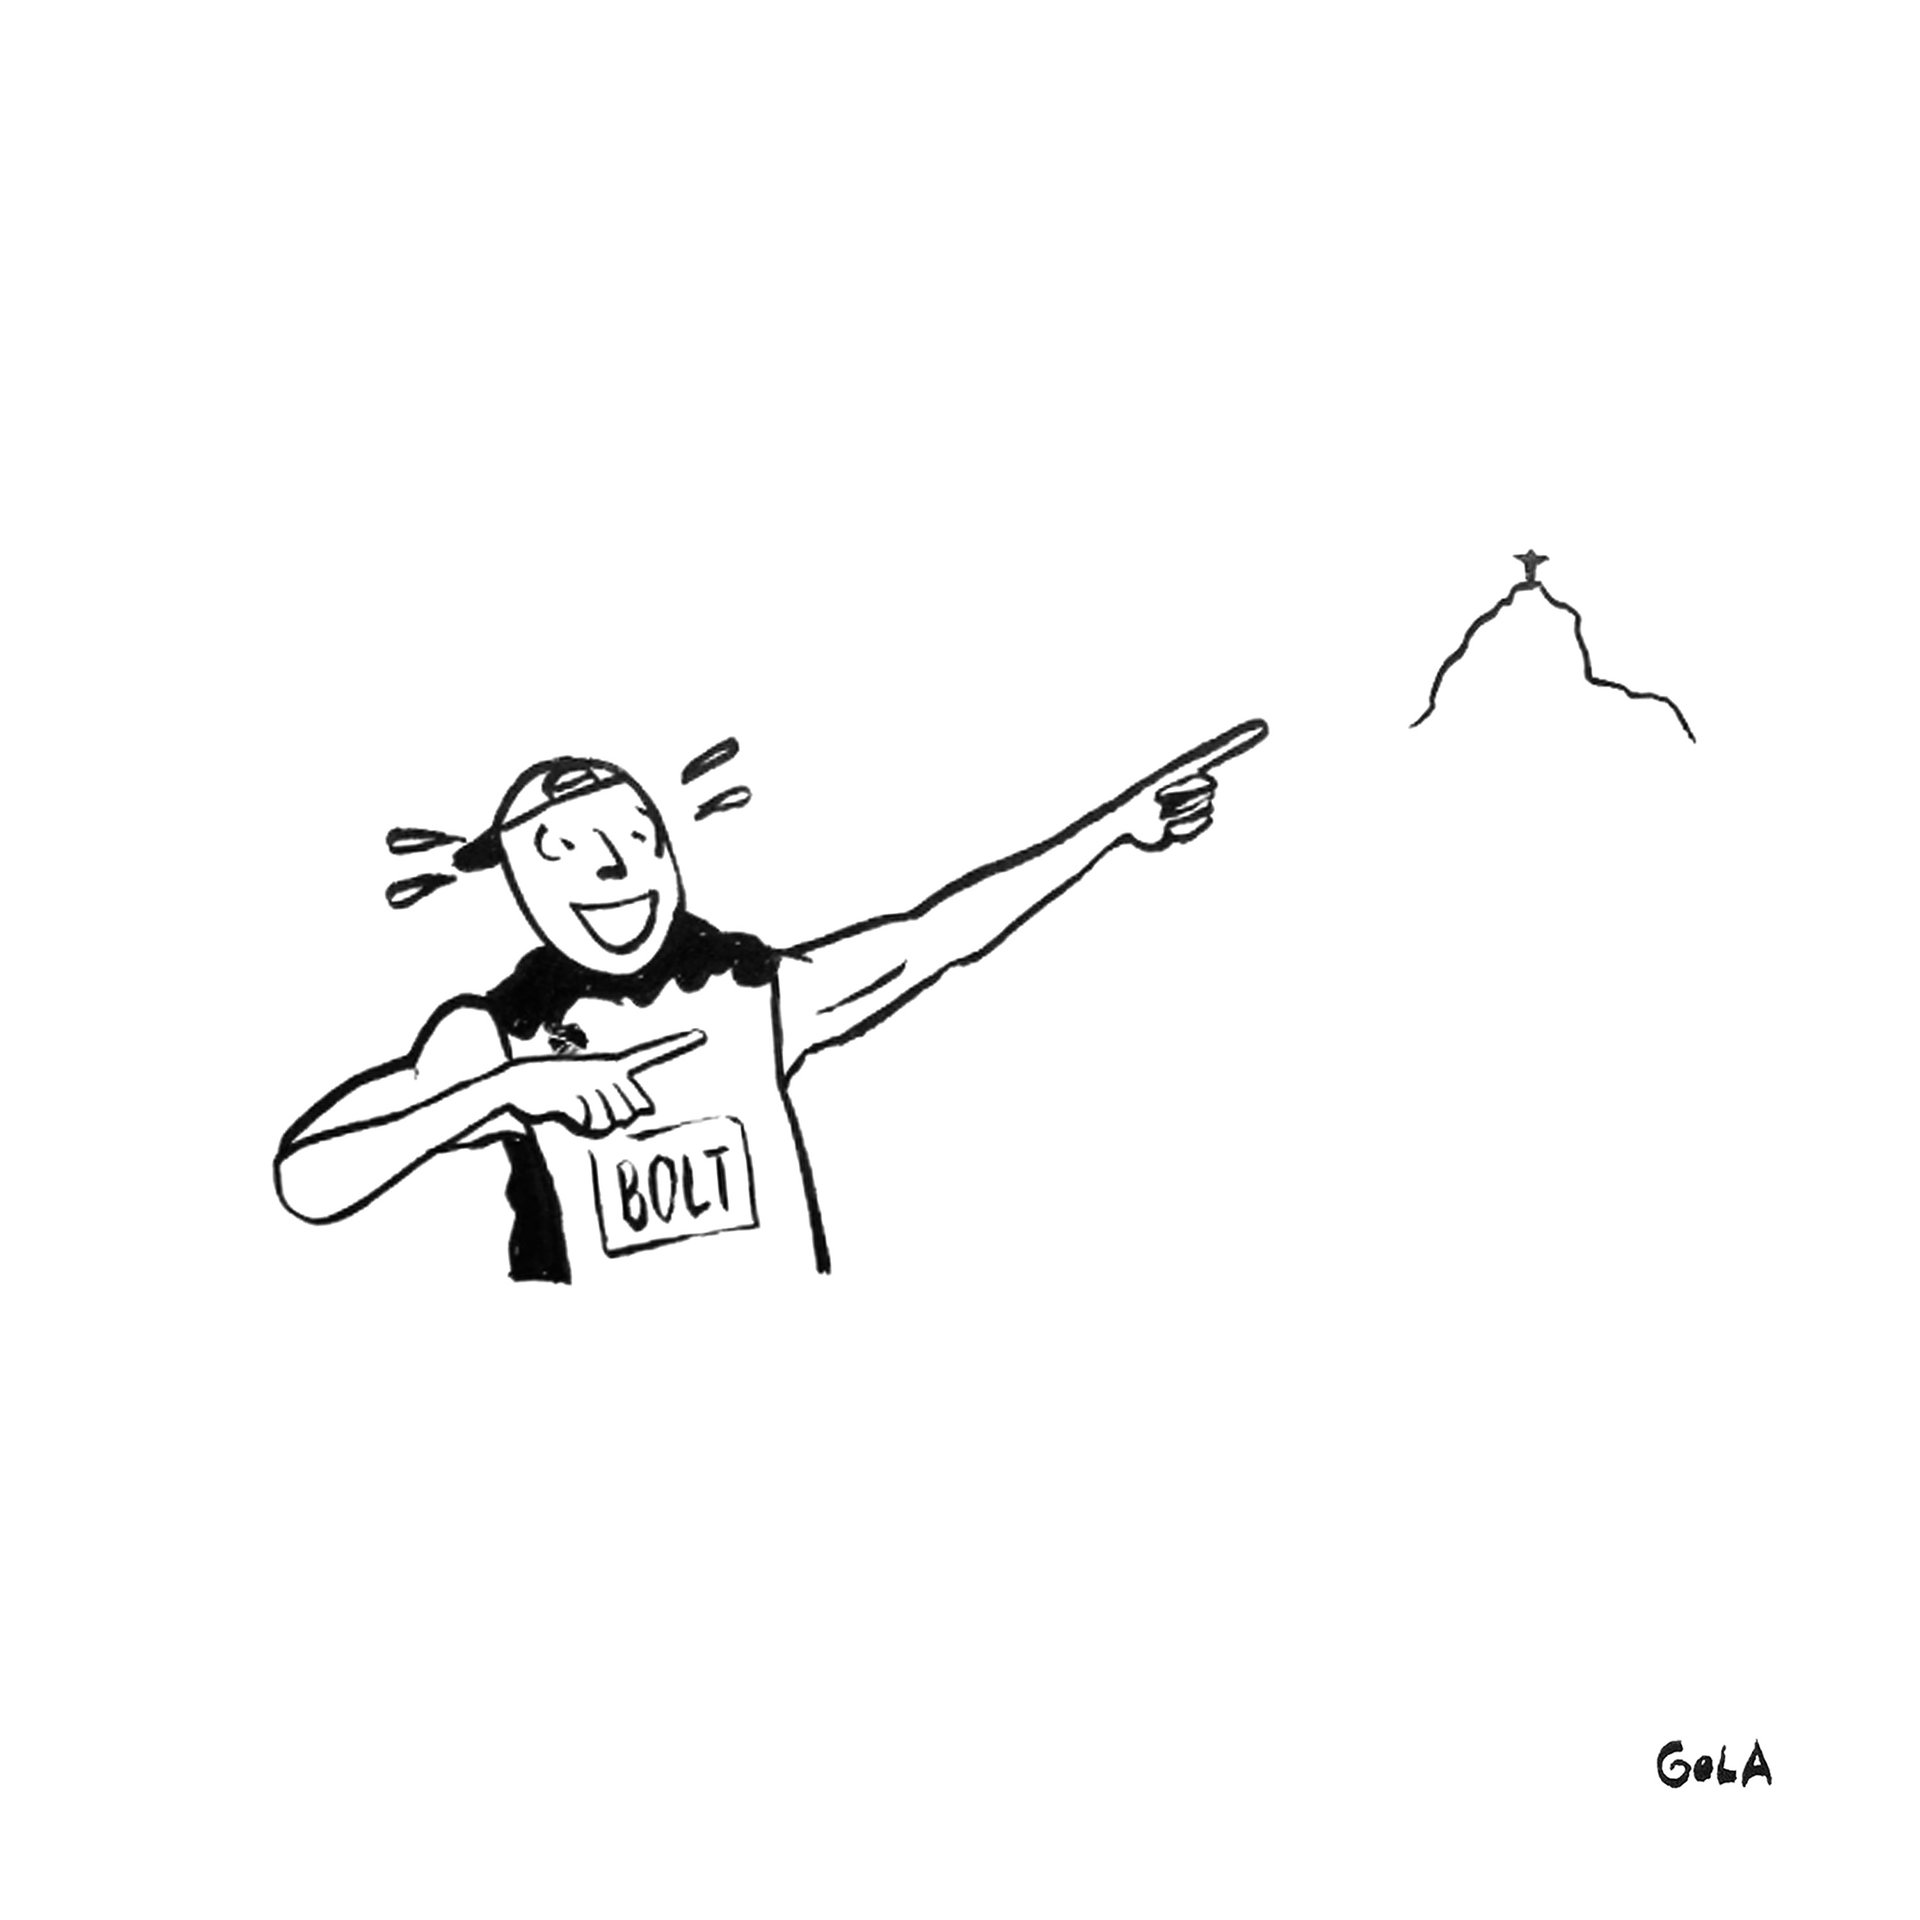 Usain Bolt conquistó Rio_Los Juegos Olímpicos visto por el artista brasileño André Gola FeelCurioso